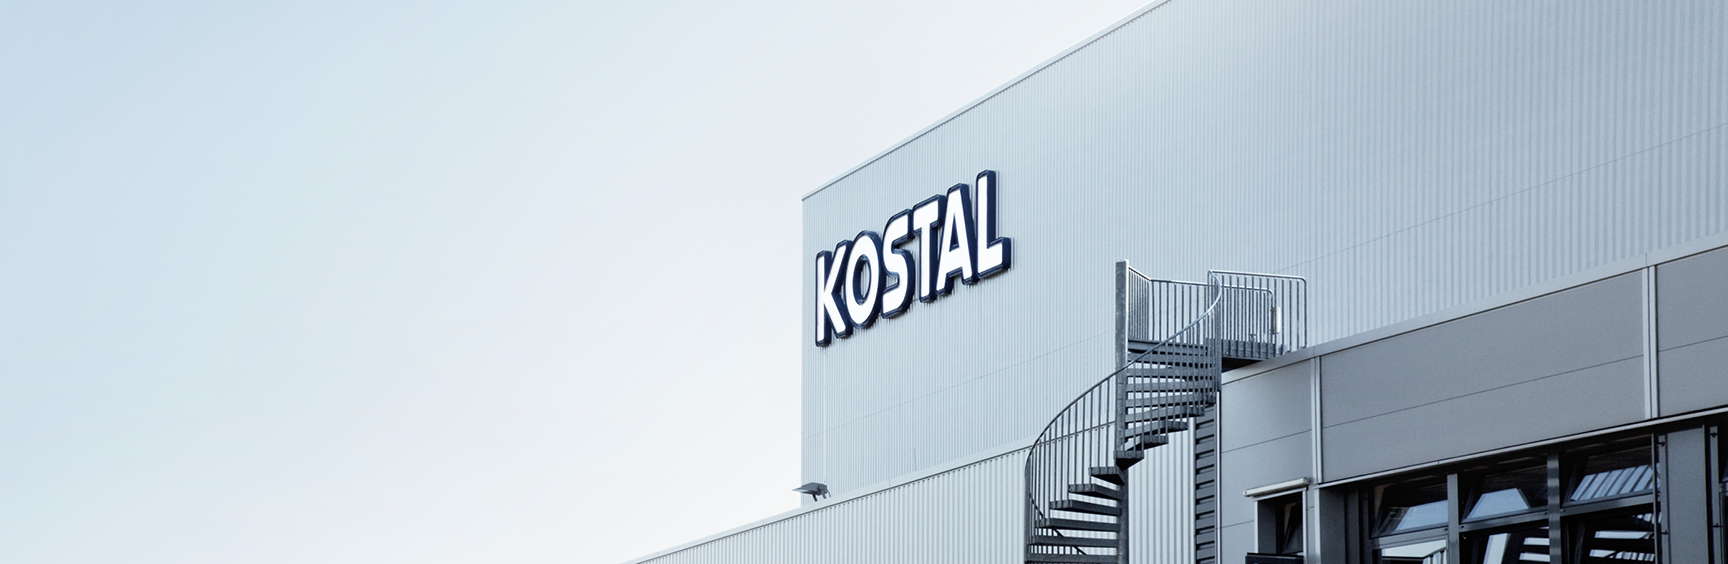 KOSTAL company building 